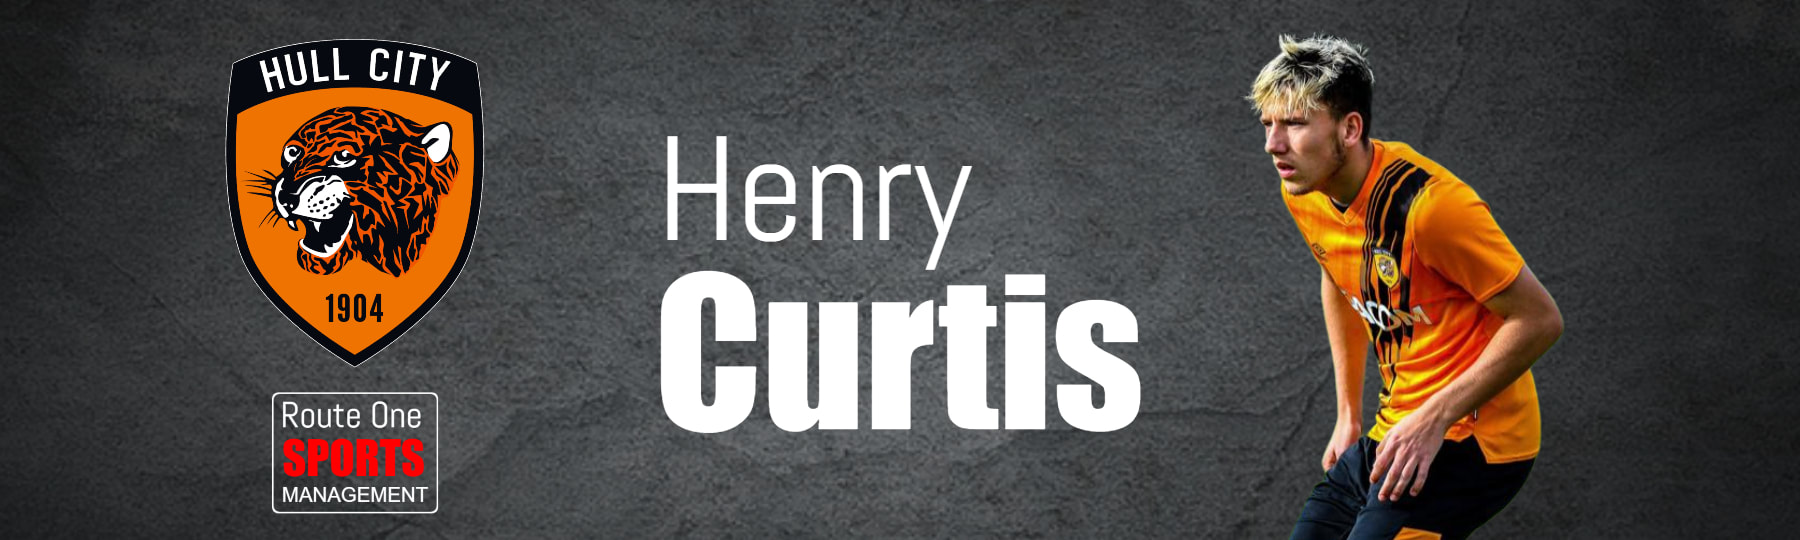 Henry Curtis of Hull City Football Club